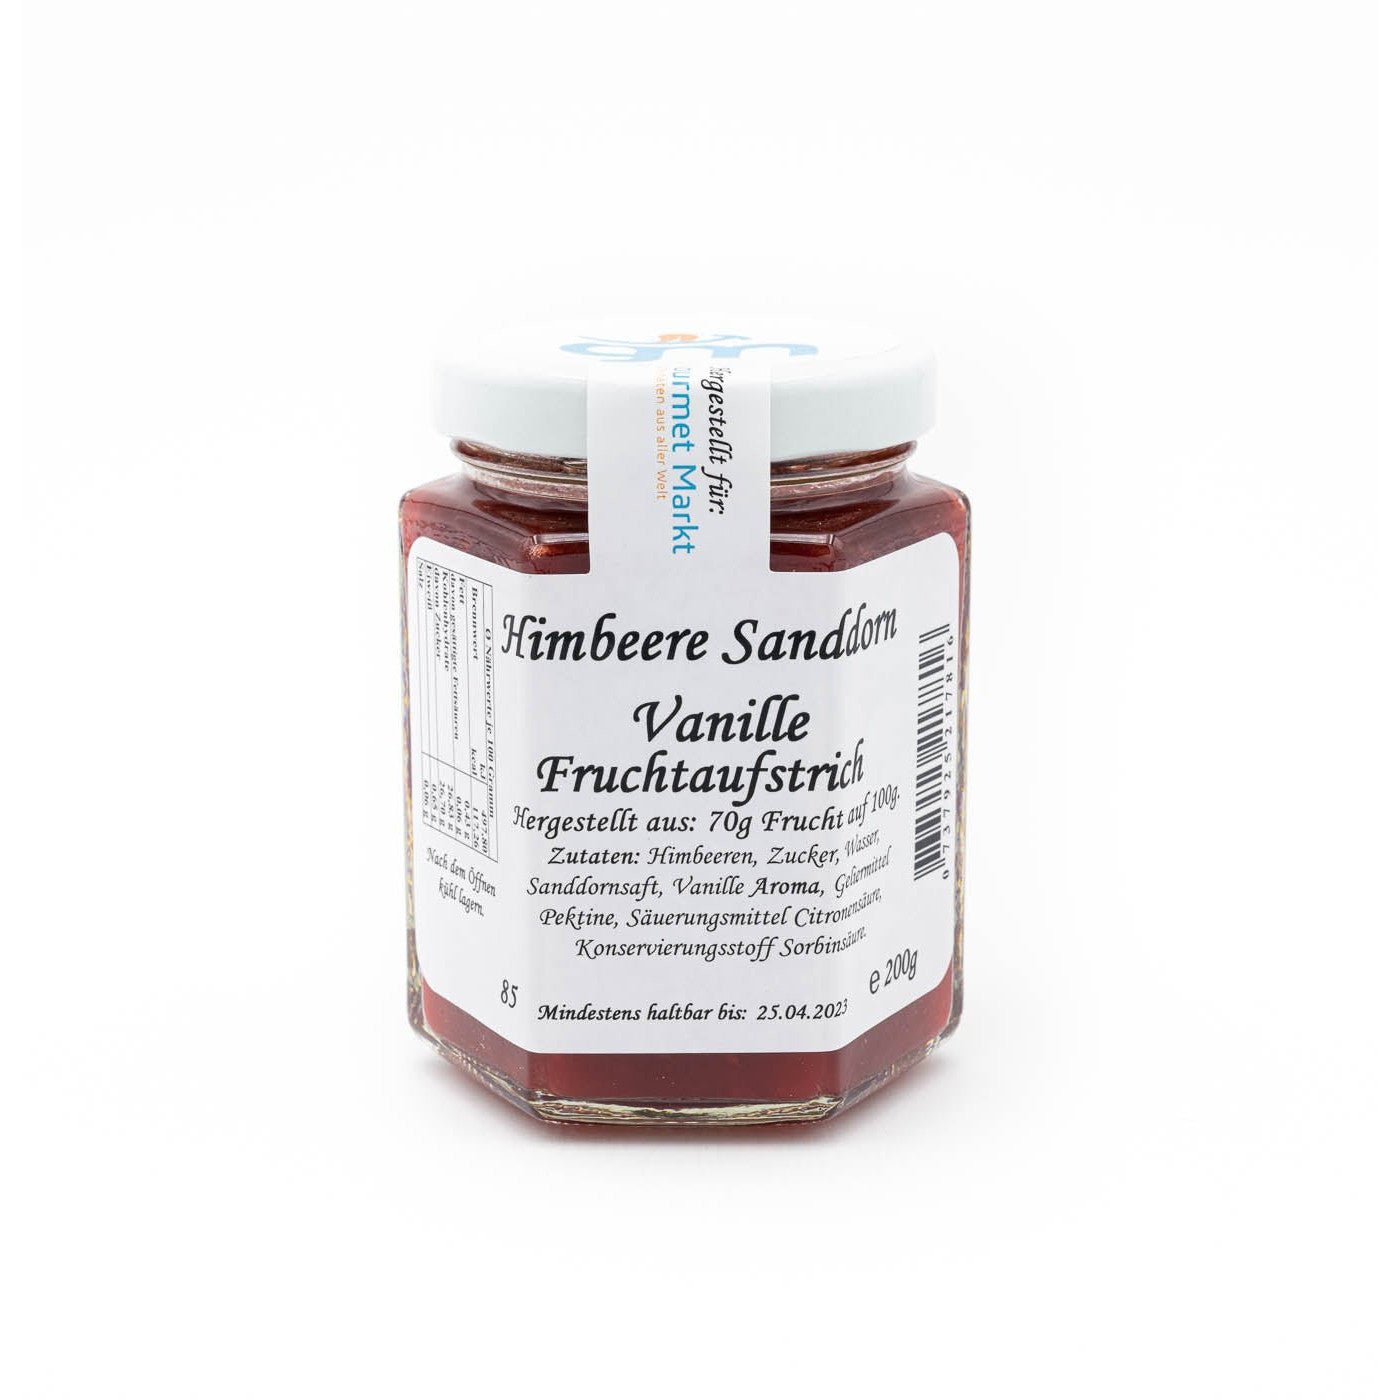 Himbeere Sanddorn Vanille (200g) - Gourmet Markt - Marmeladen Manufaktur